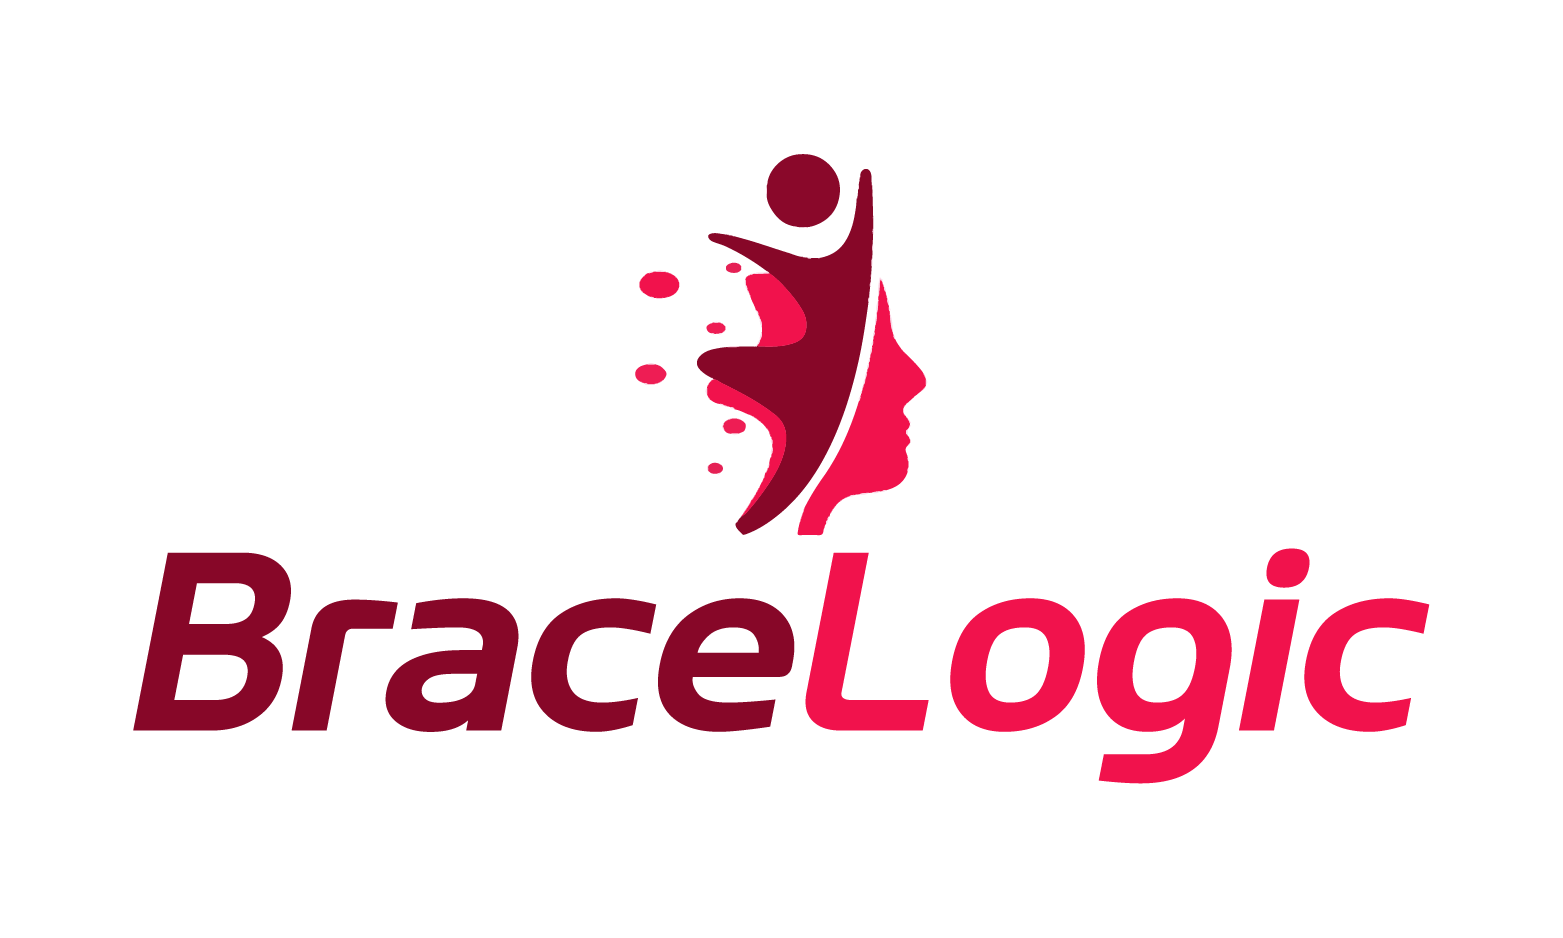 BraceLogic.com - Creative brandable domain for sale